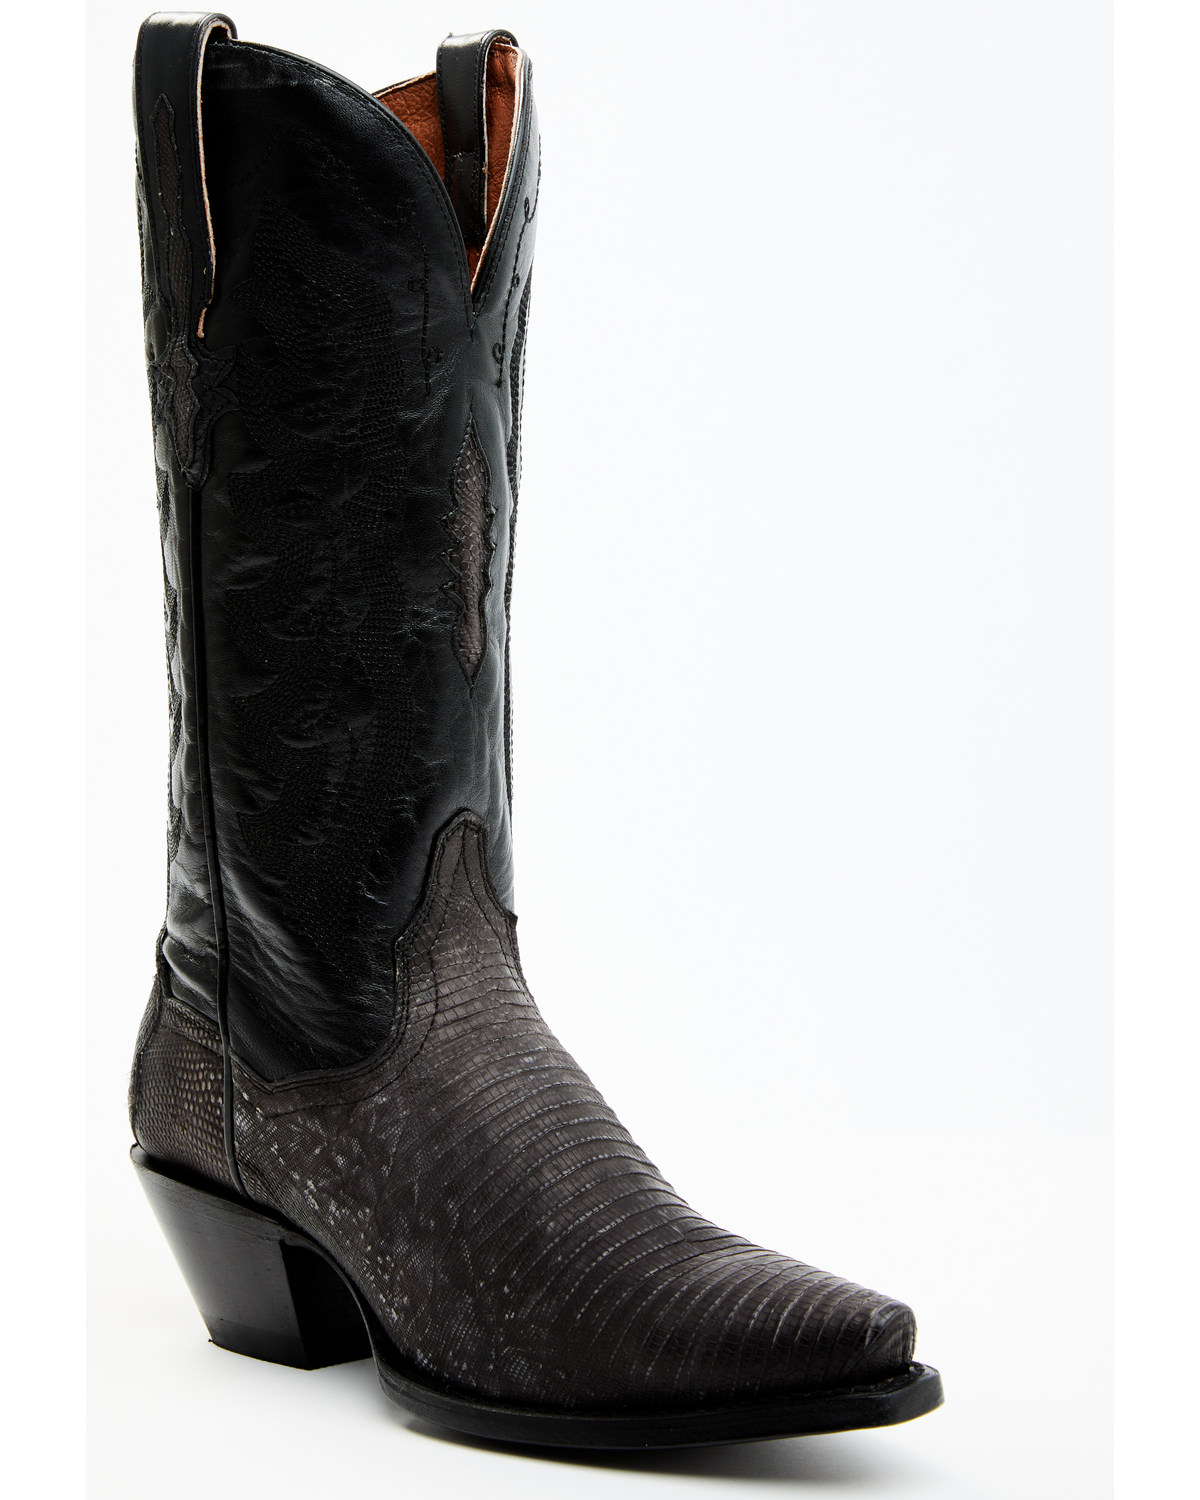 Dan Post Women's Exotic Lizard Western Boots - Snip Toe